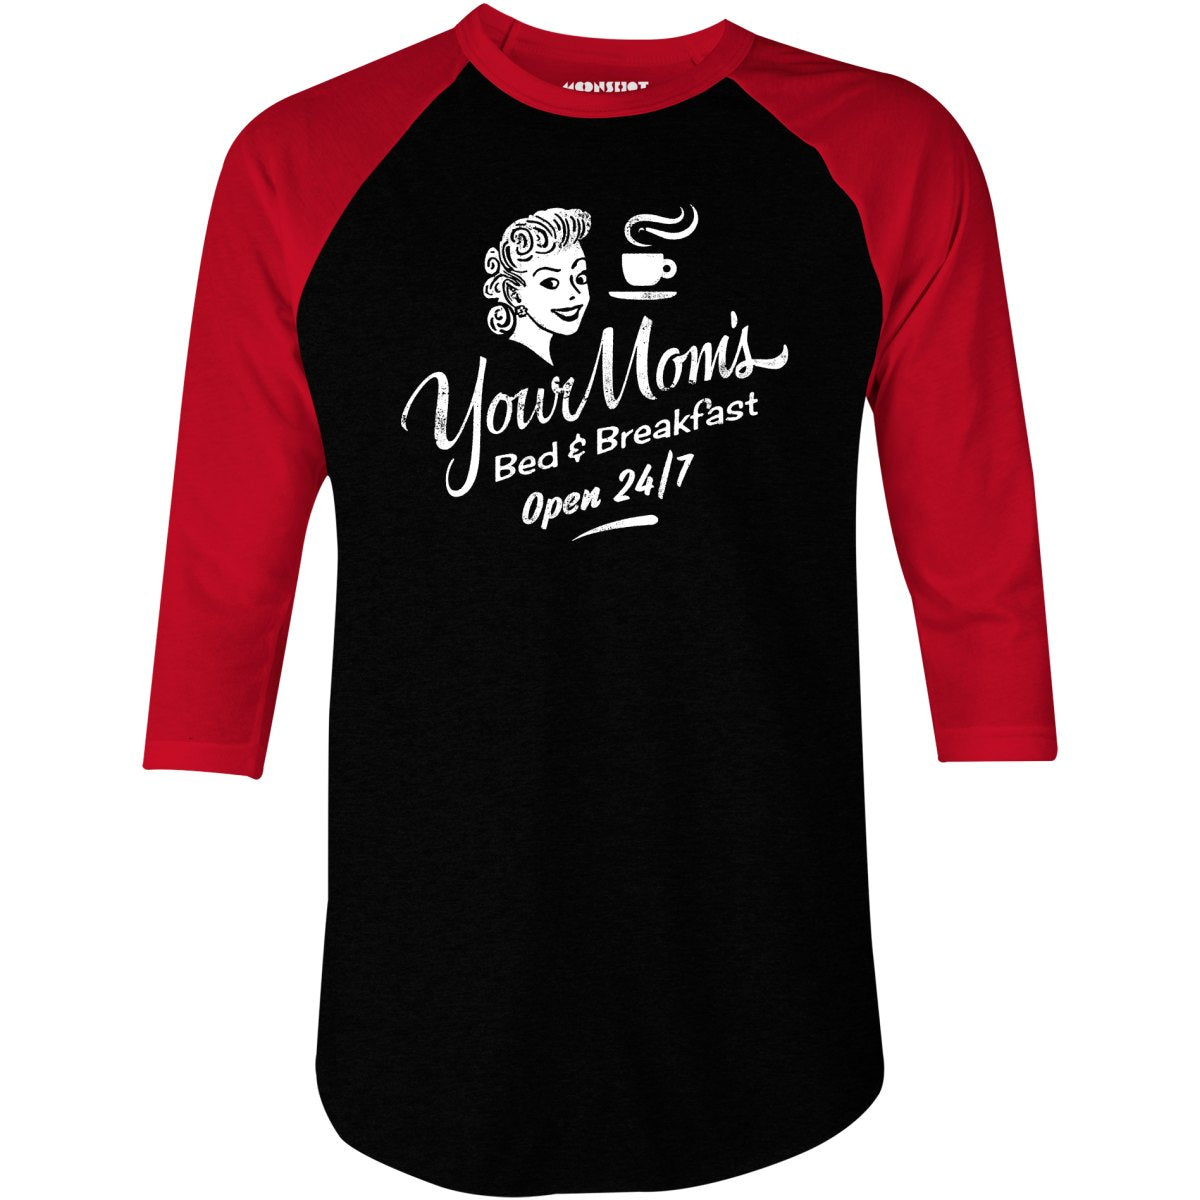 Your Mom's Bed & Breakfast - 3/4 Sleeve Raglan T-Shirt